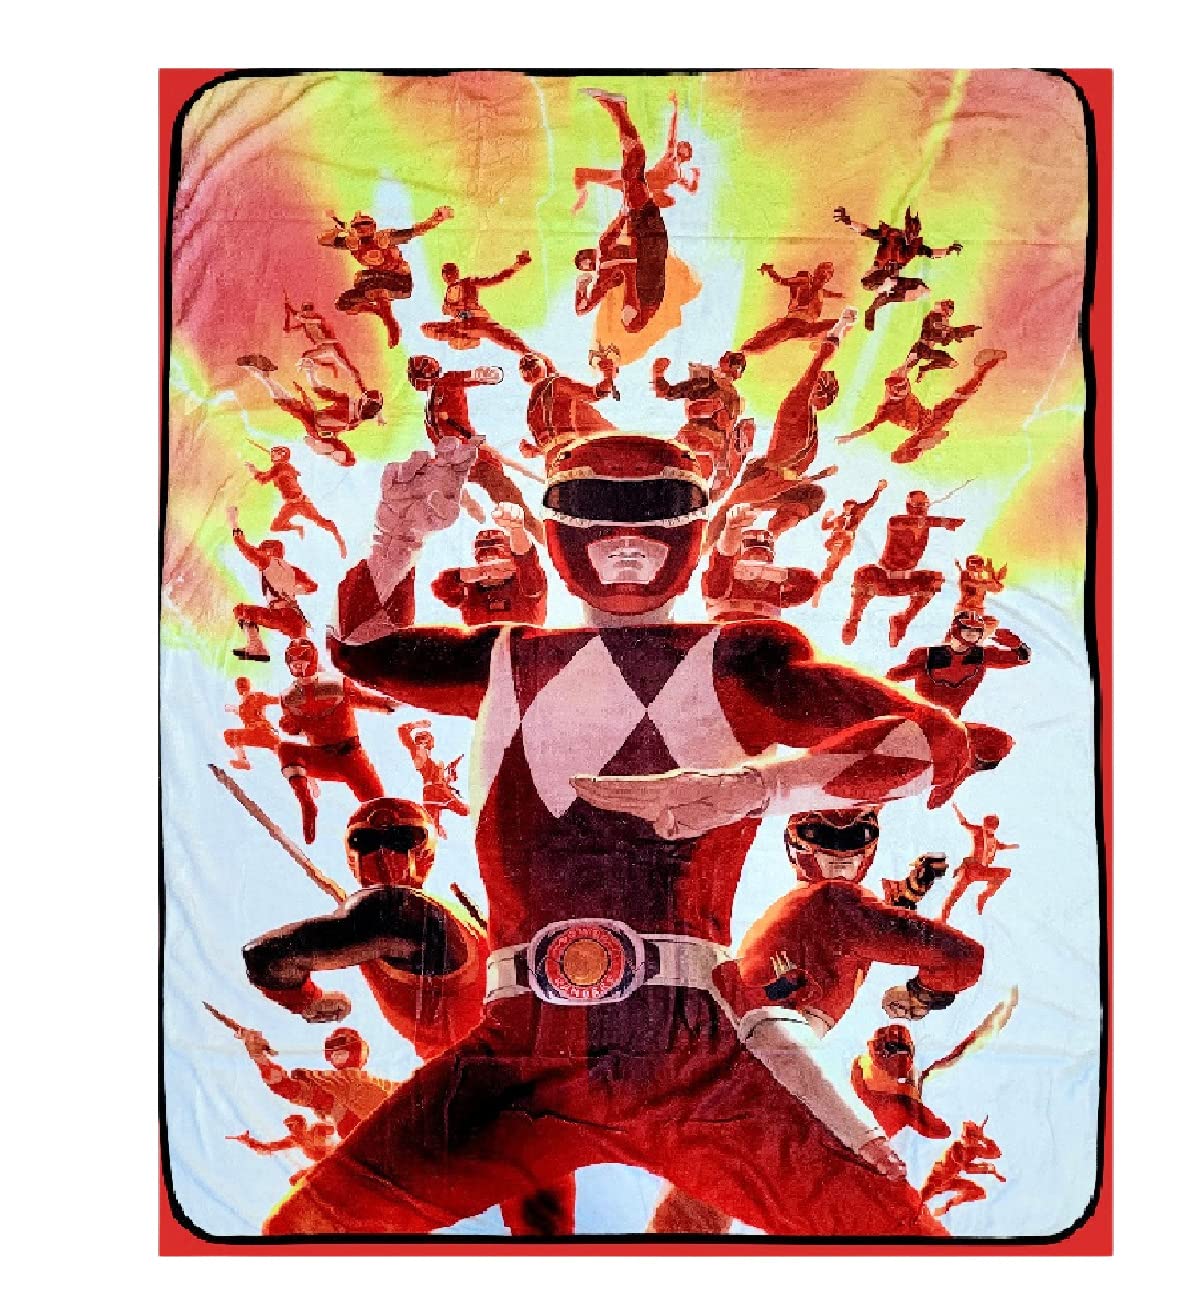 Power Rangers Red Ranger Fleece Throw Blanket| Measures 60 x 45 Inches